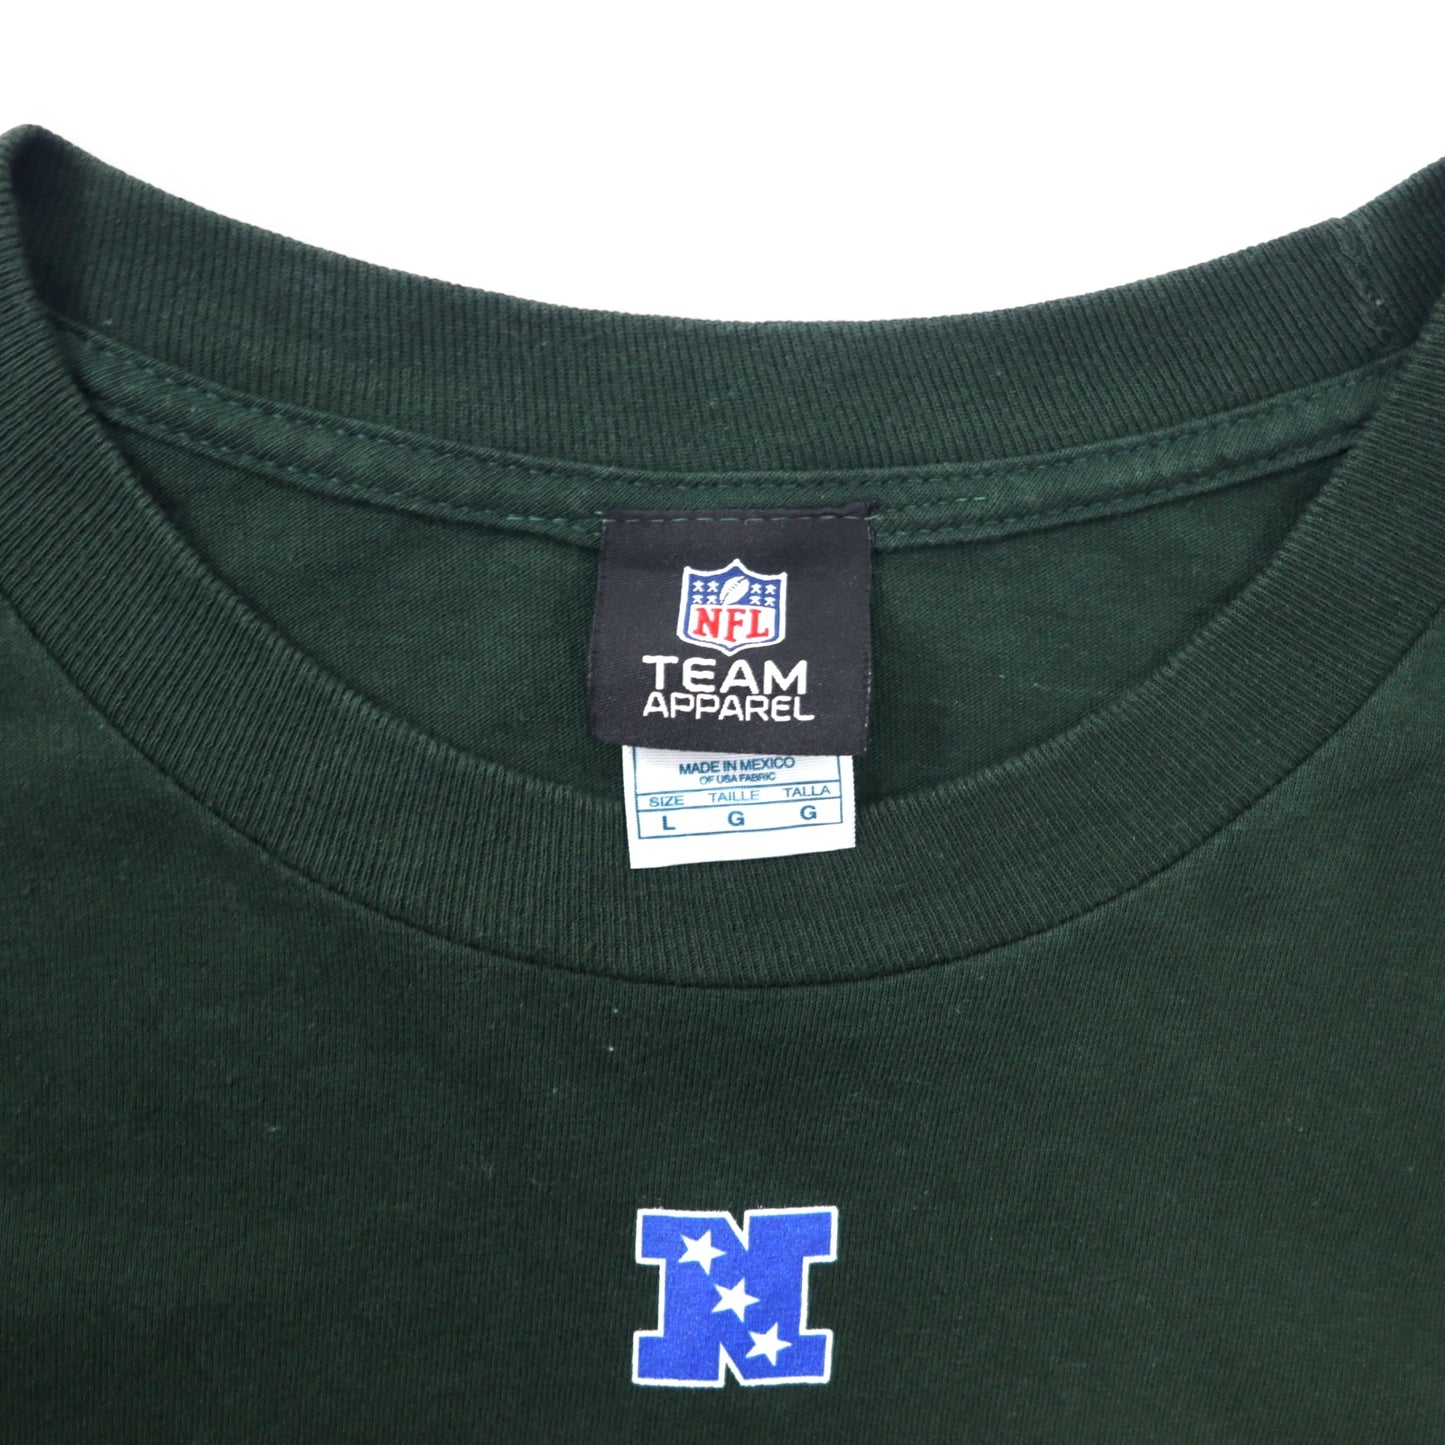 NFL TEAM APPAREL パッカーズ プリント ロングスリーブ Tシャツ ロンT L グリーン コットン PACKERS メキシコ製